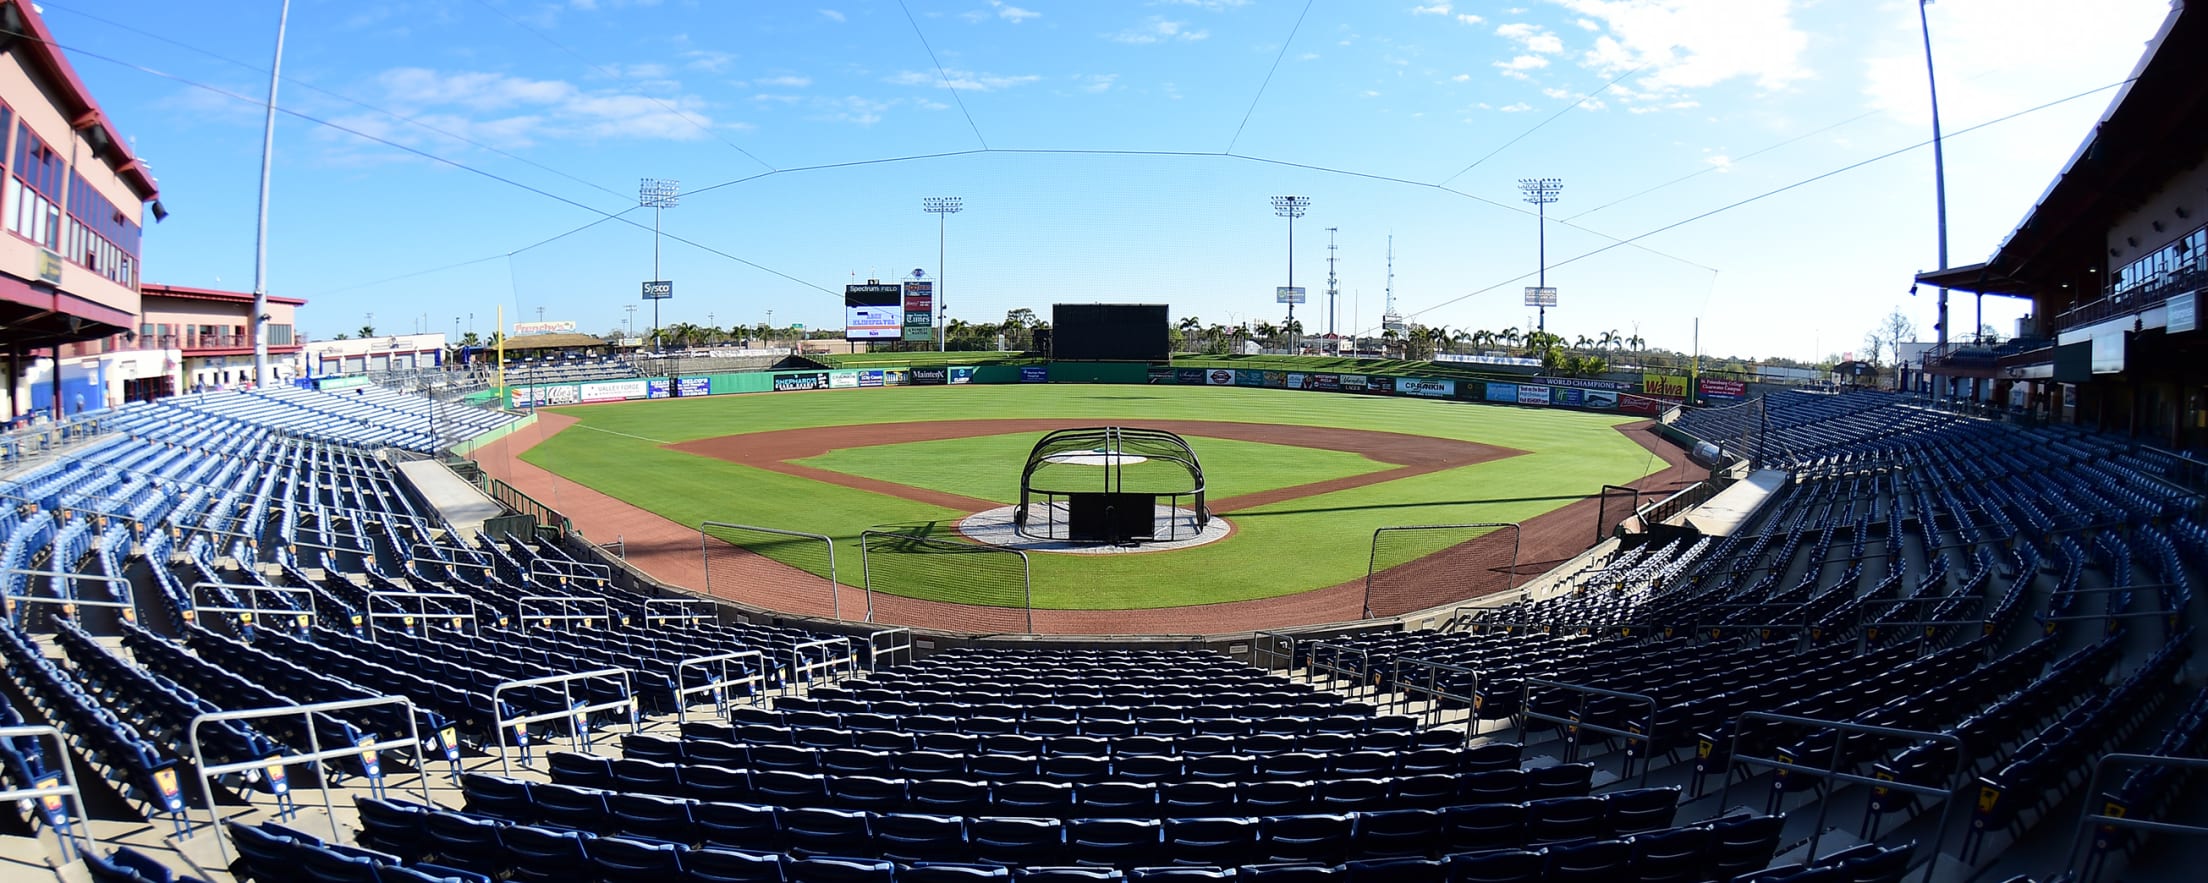 Baseball City Sports Complex, Haines City, Florida. Spring